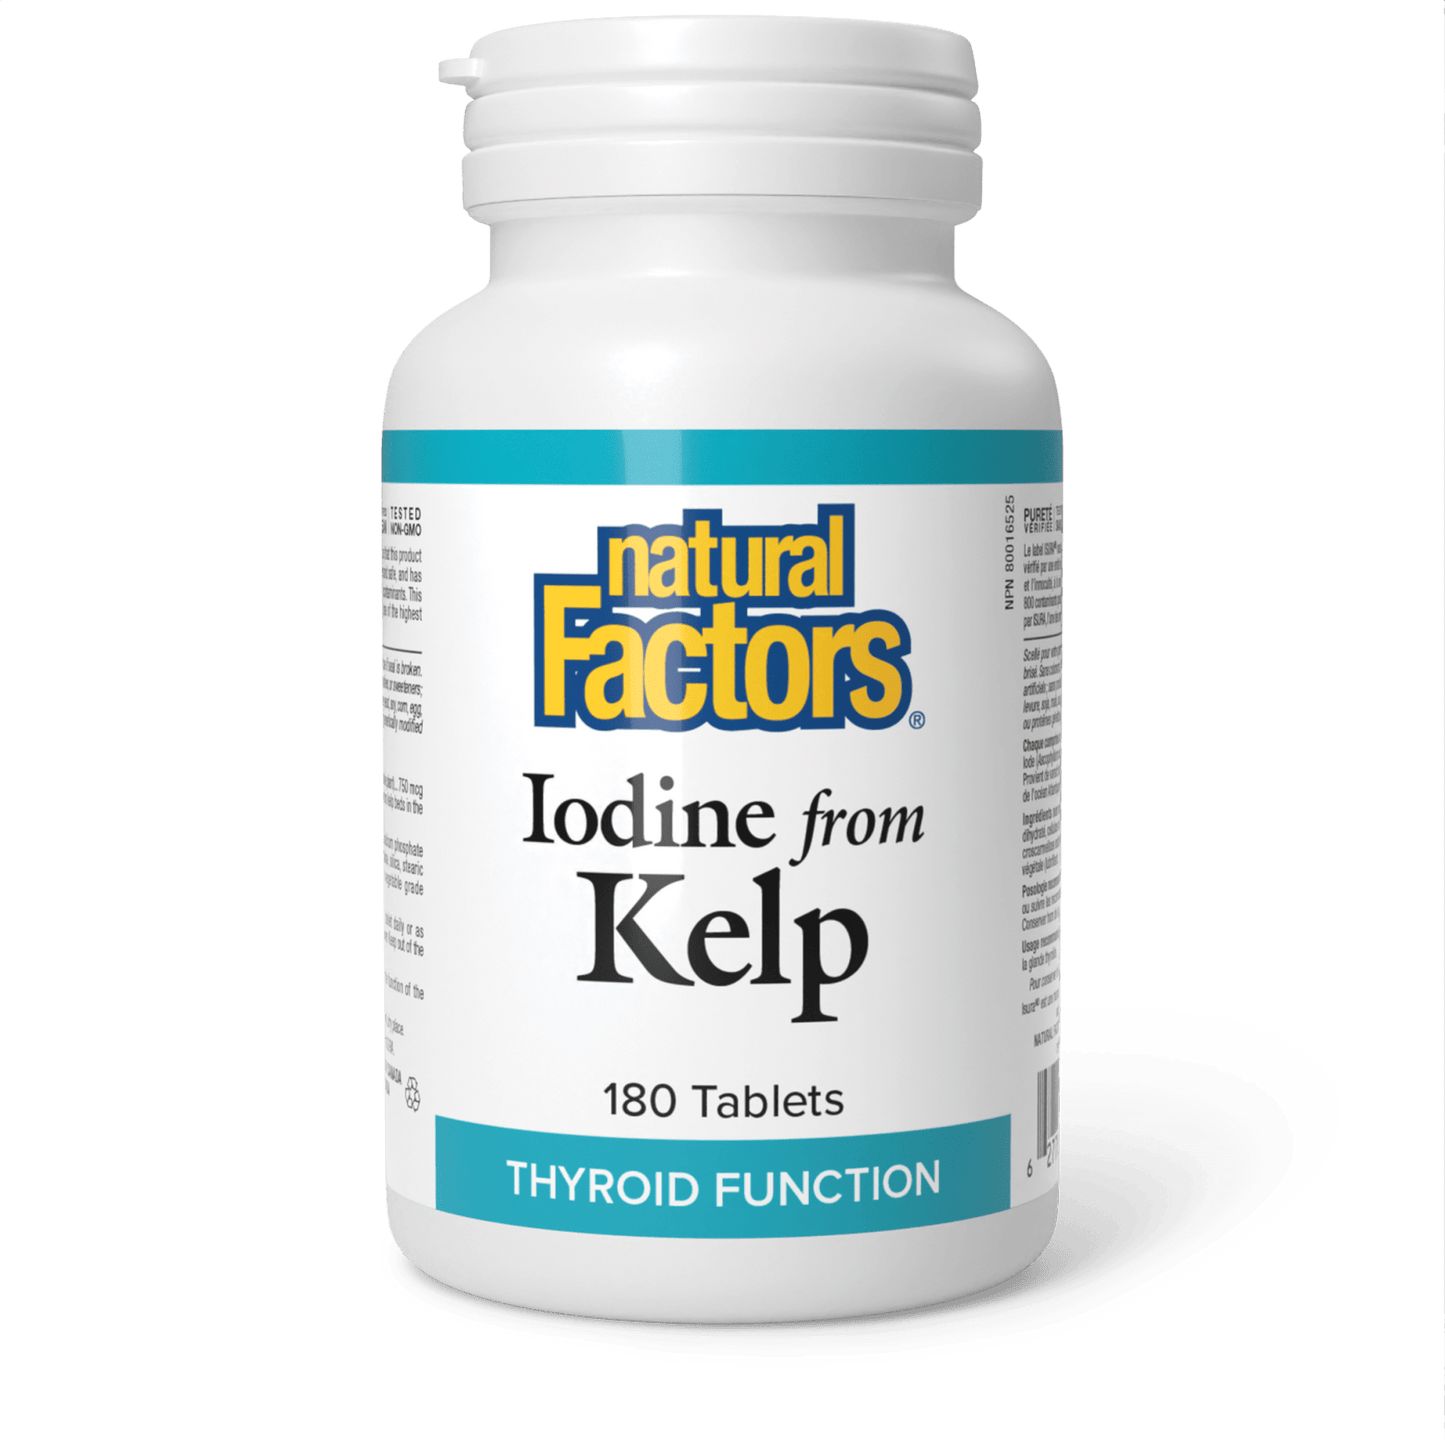 Iodine from Kelp, Natural Factors|v|image|2501